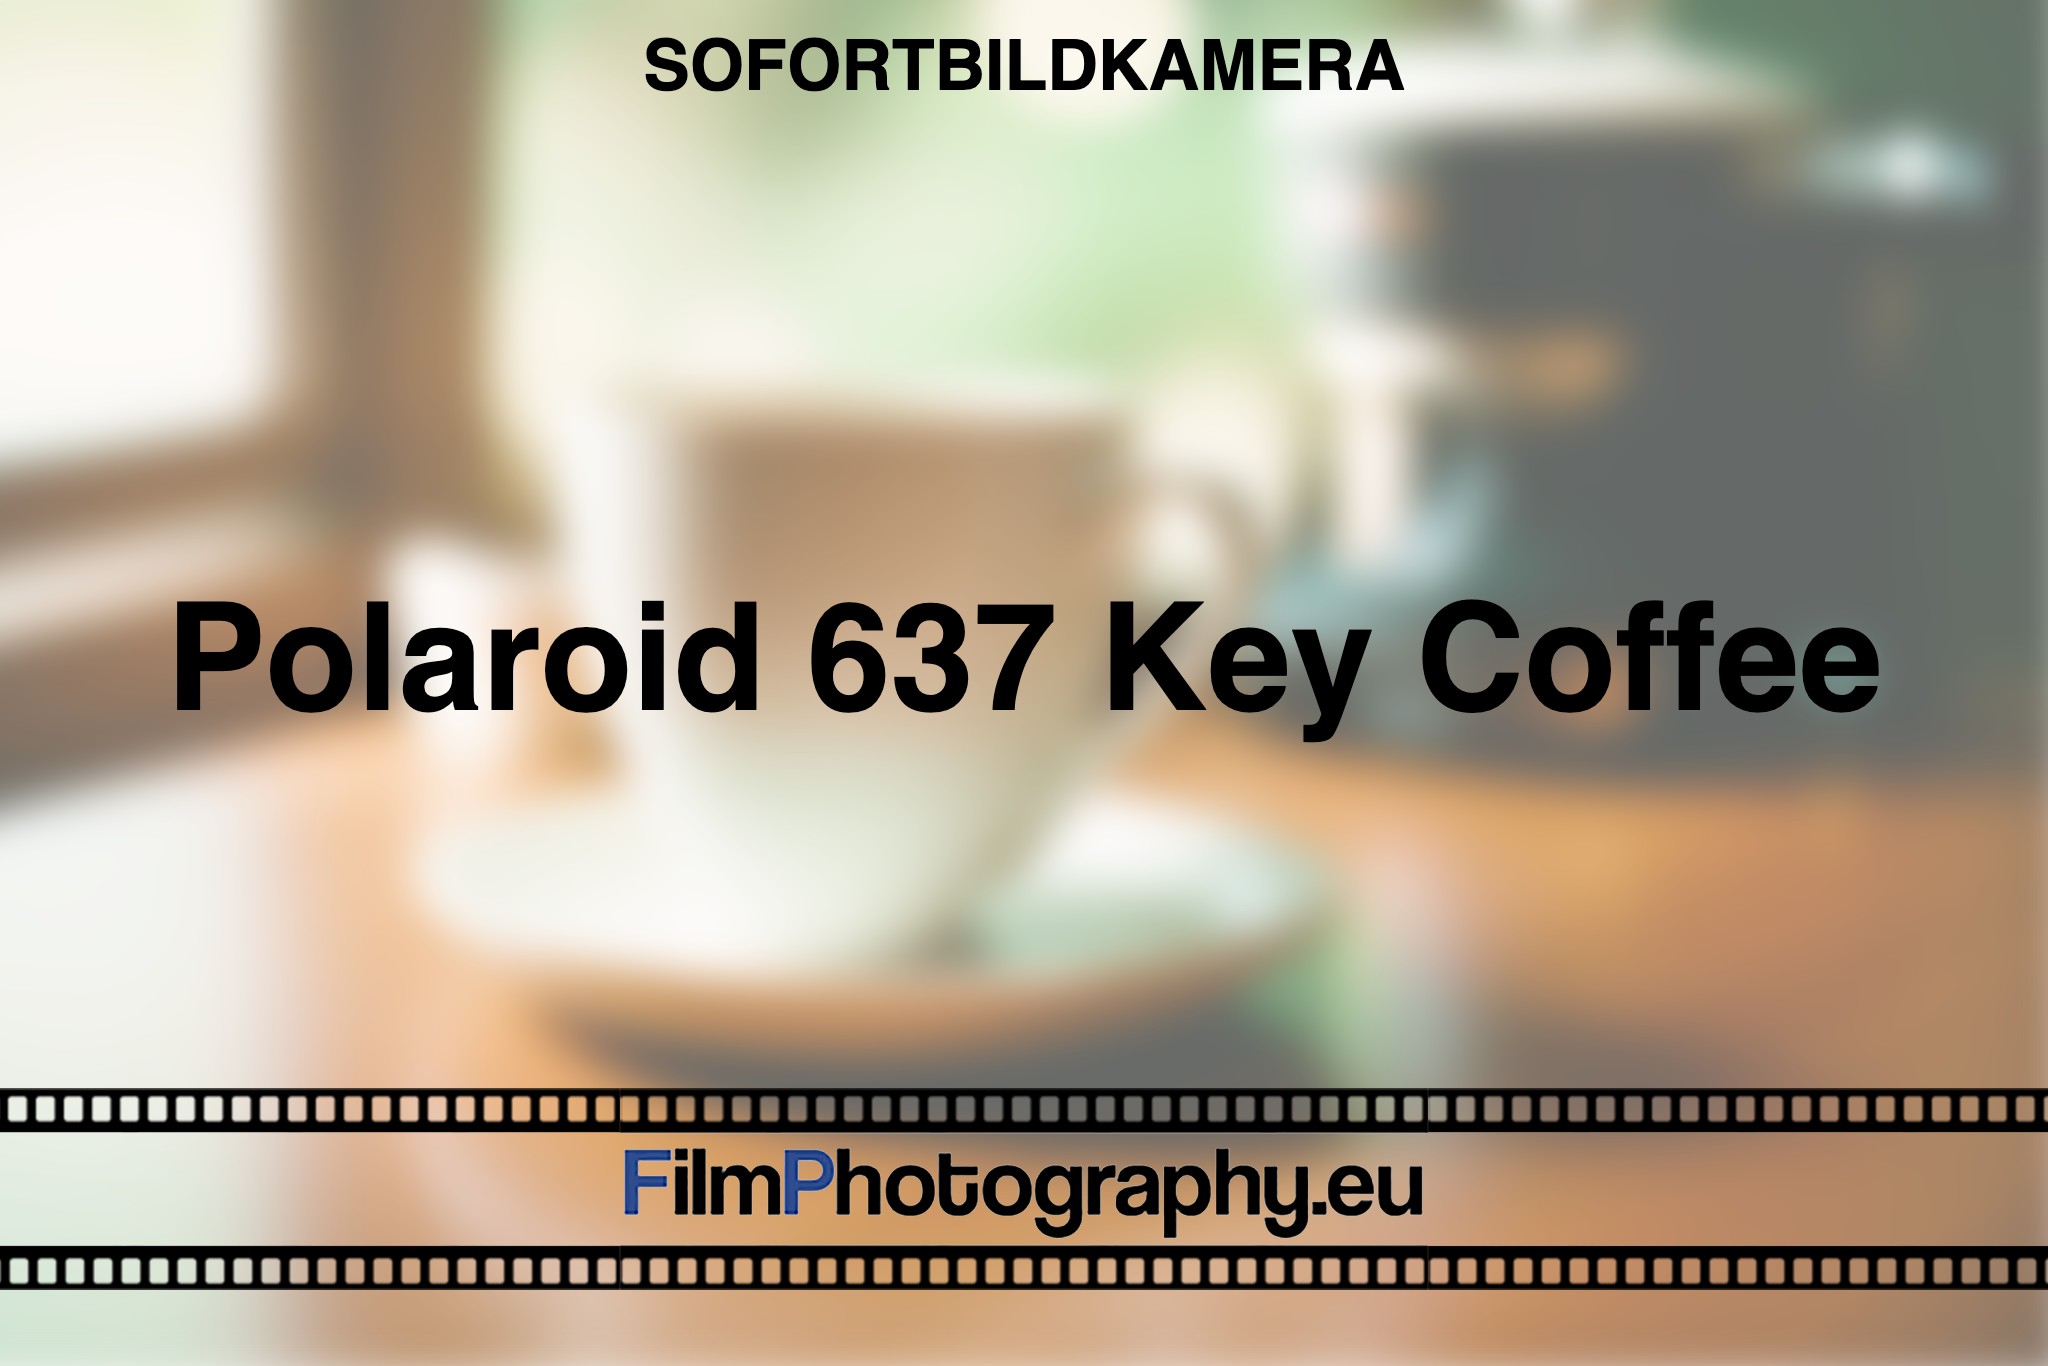 polaroid-637-key-coffee-sofortbildkamera-fp-bnv